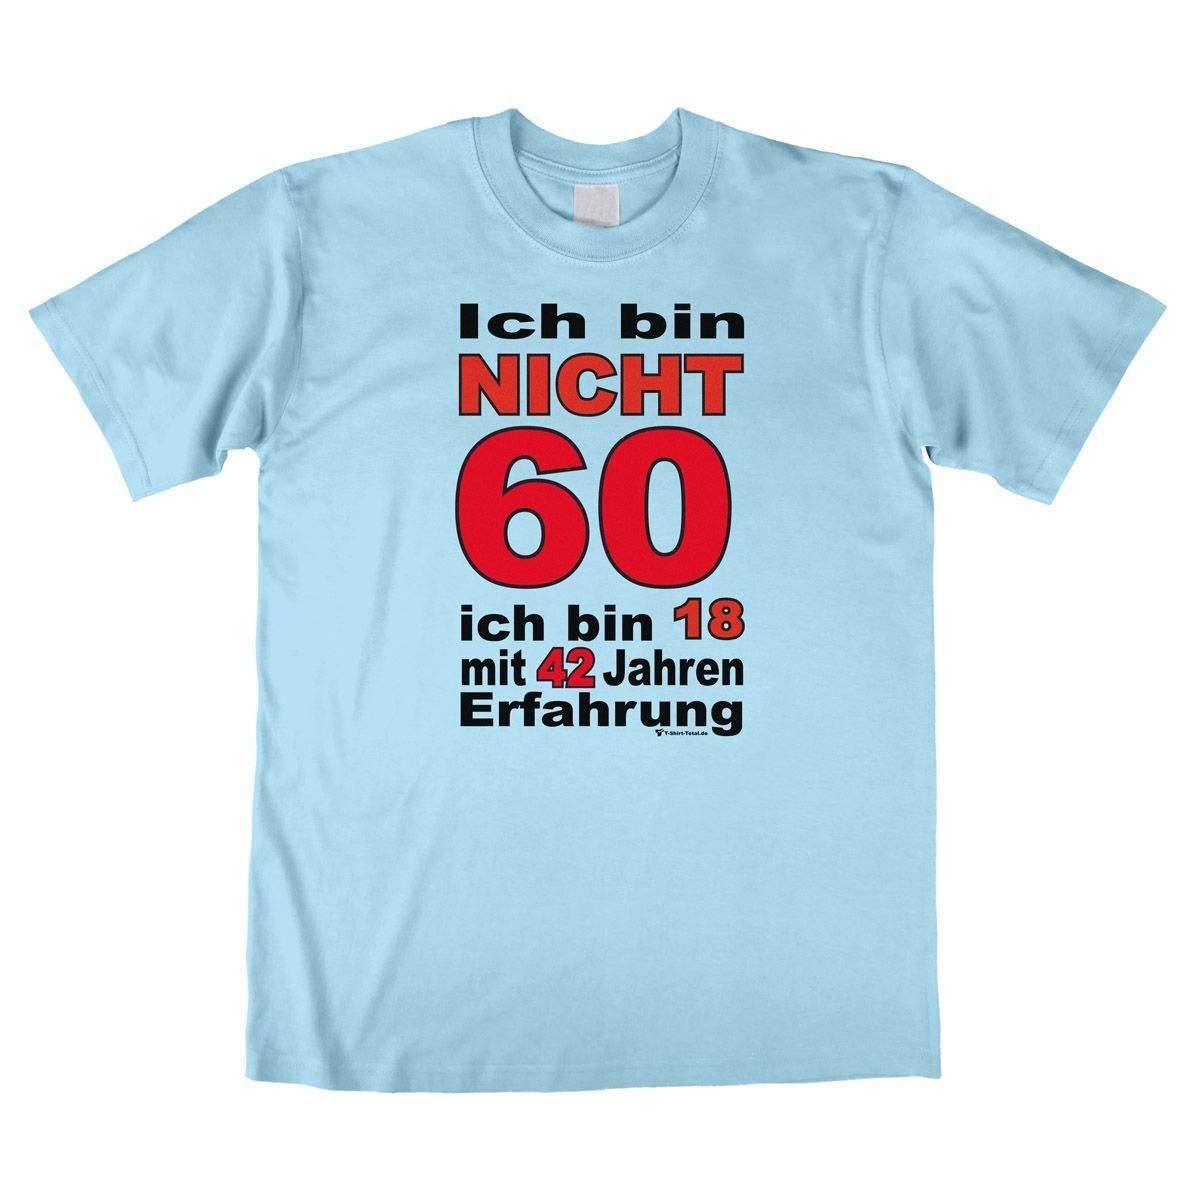 Bin nicht 60 Unisex T-Shirt hellblau Large